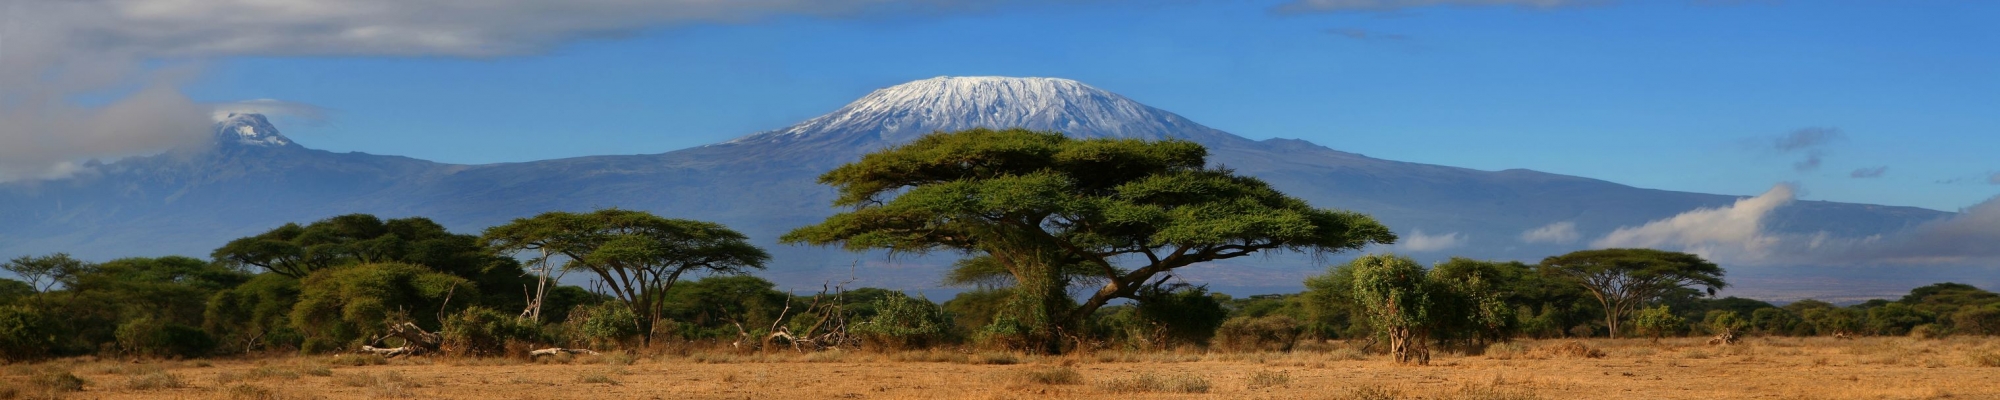 Le Kilimandjaro depuis Amboseli en safari au Kenya